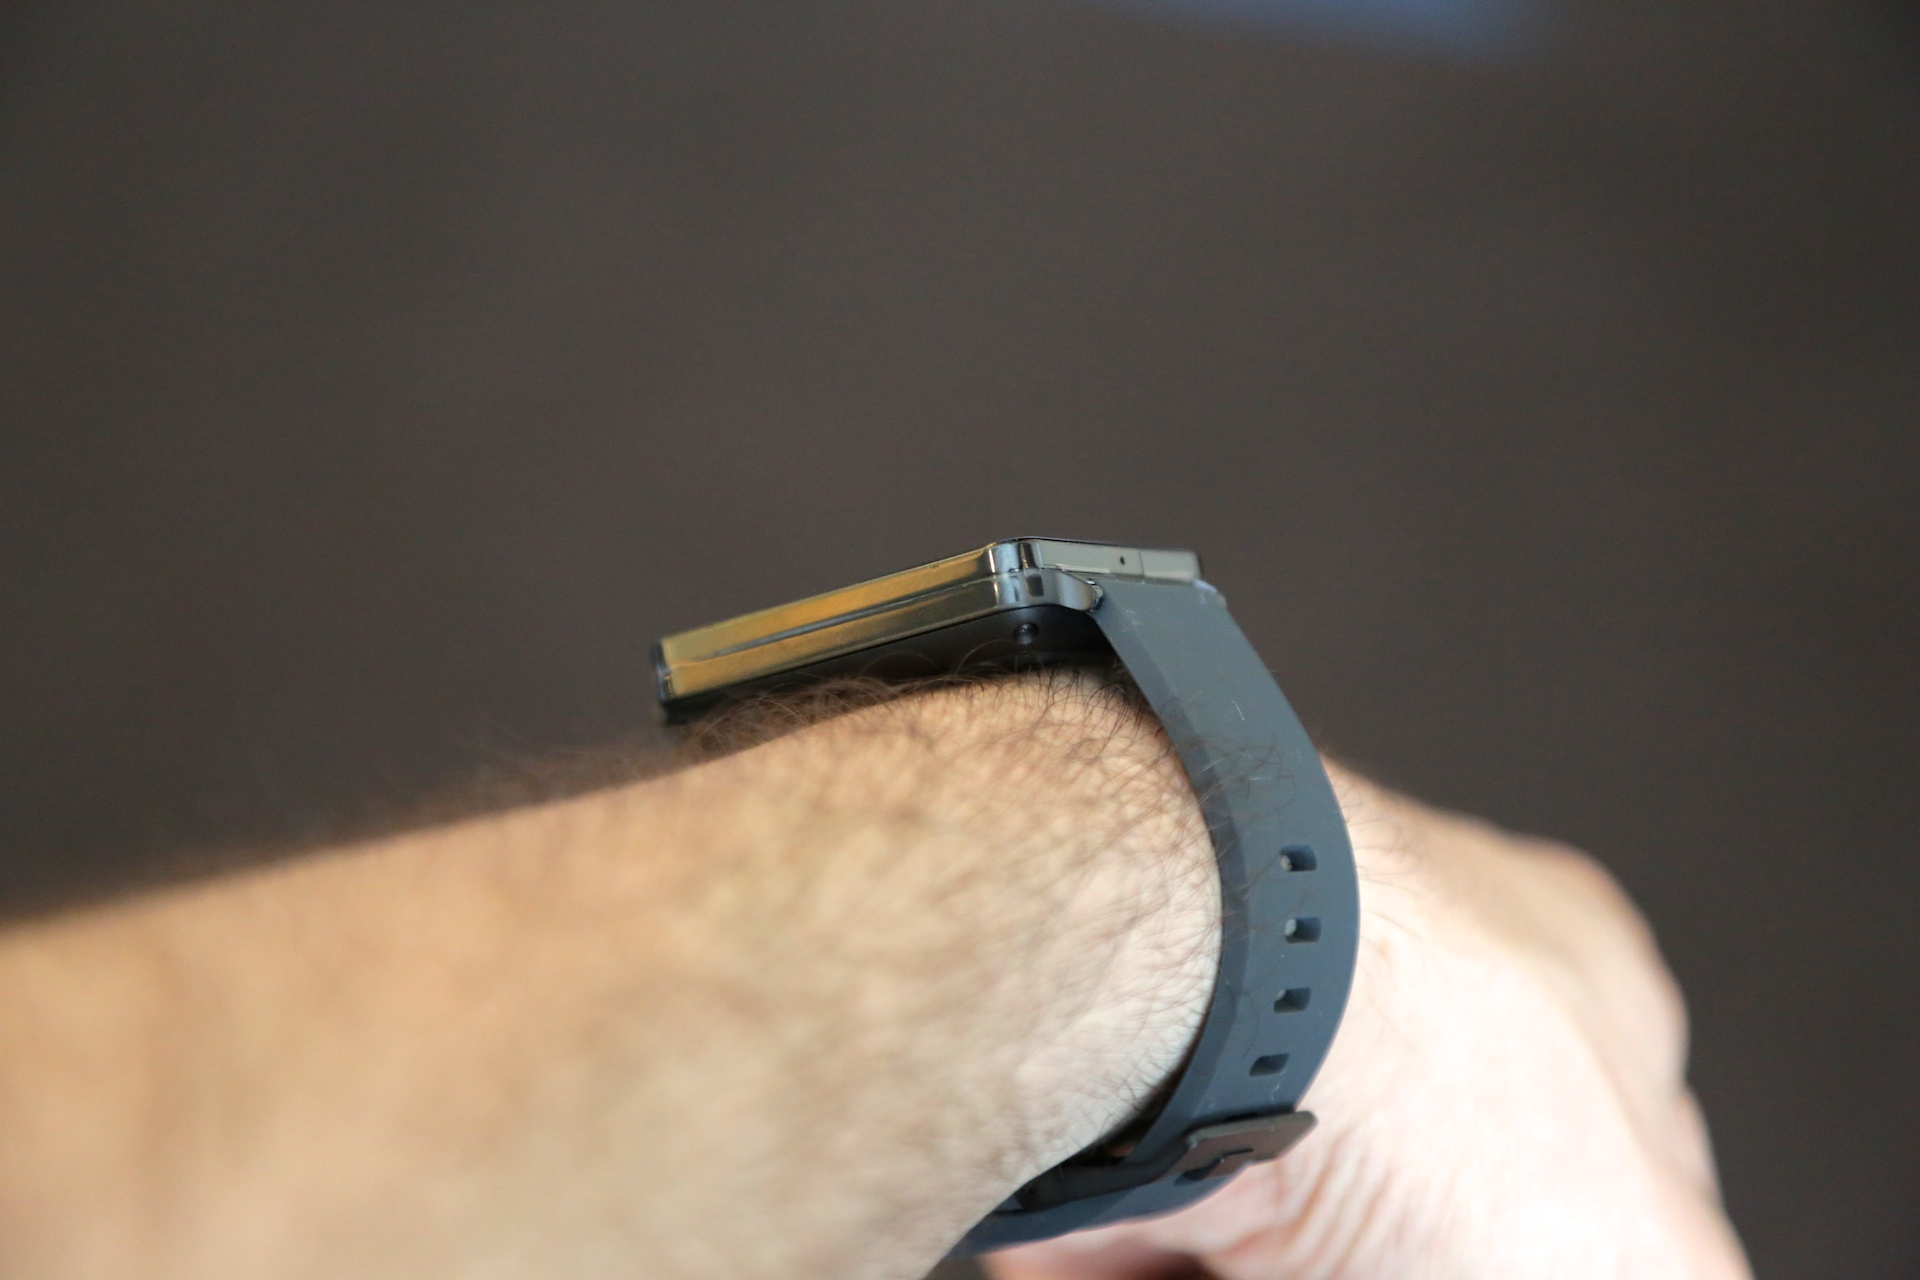 LG G Watch Hands-On: A Smartwatch That Feels Like A Watch